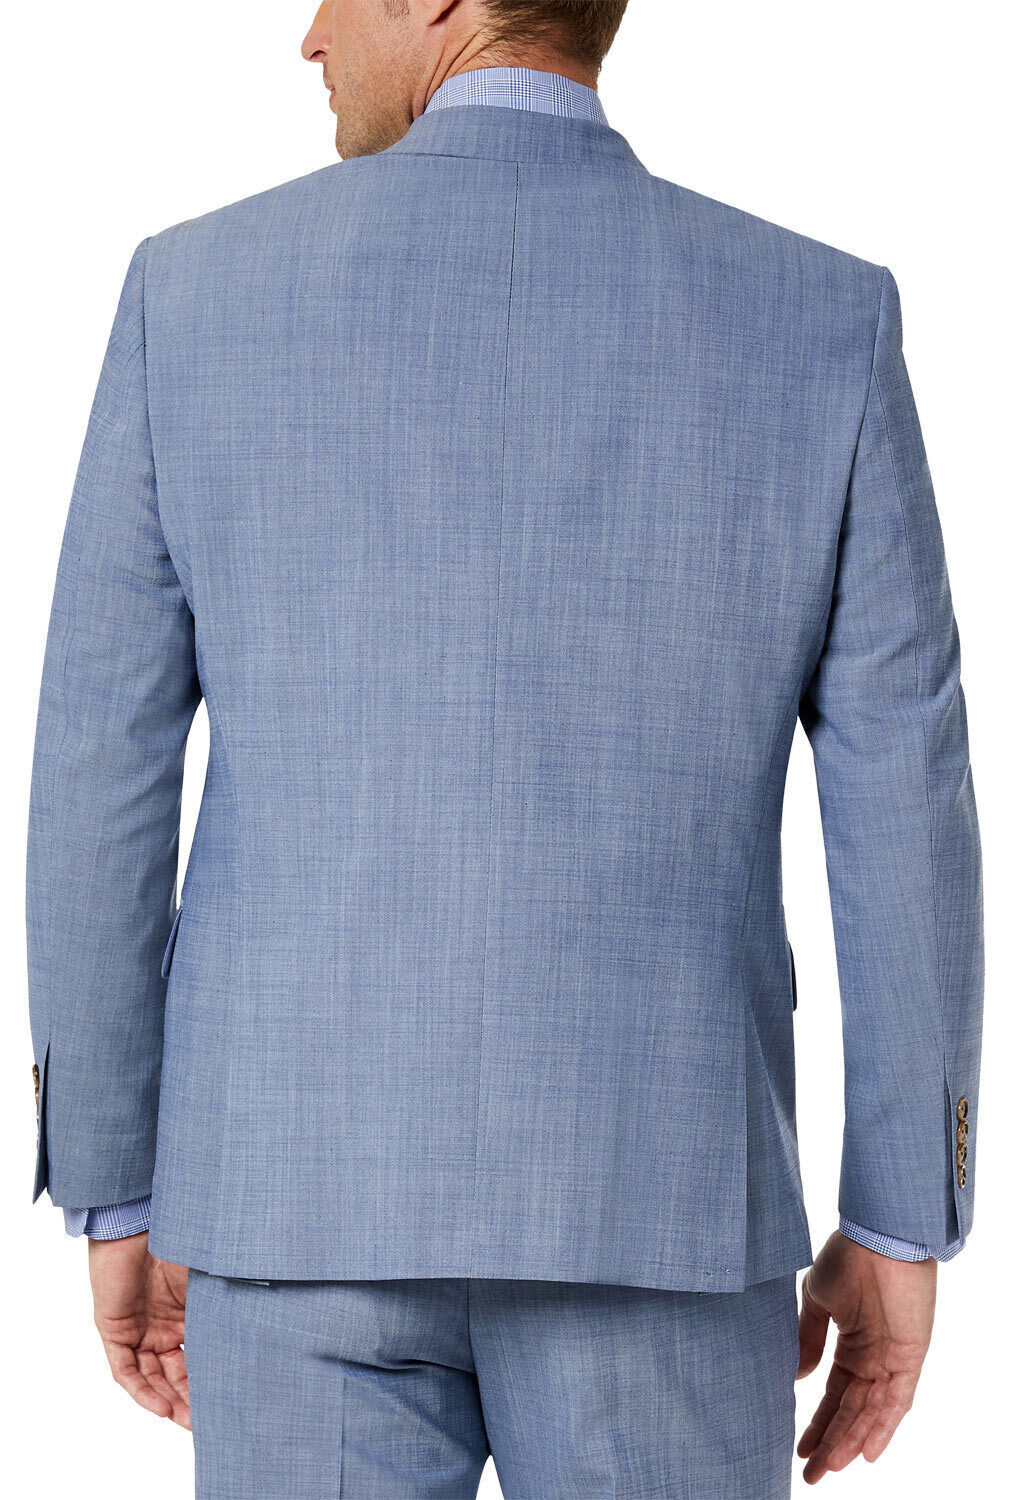 Lauren Ralph Lauren Men's Classic-Fit Suit Jacket 36S Light Blue